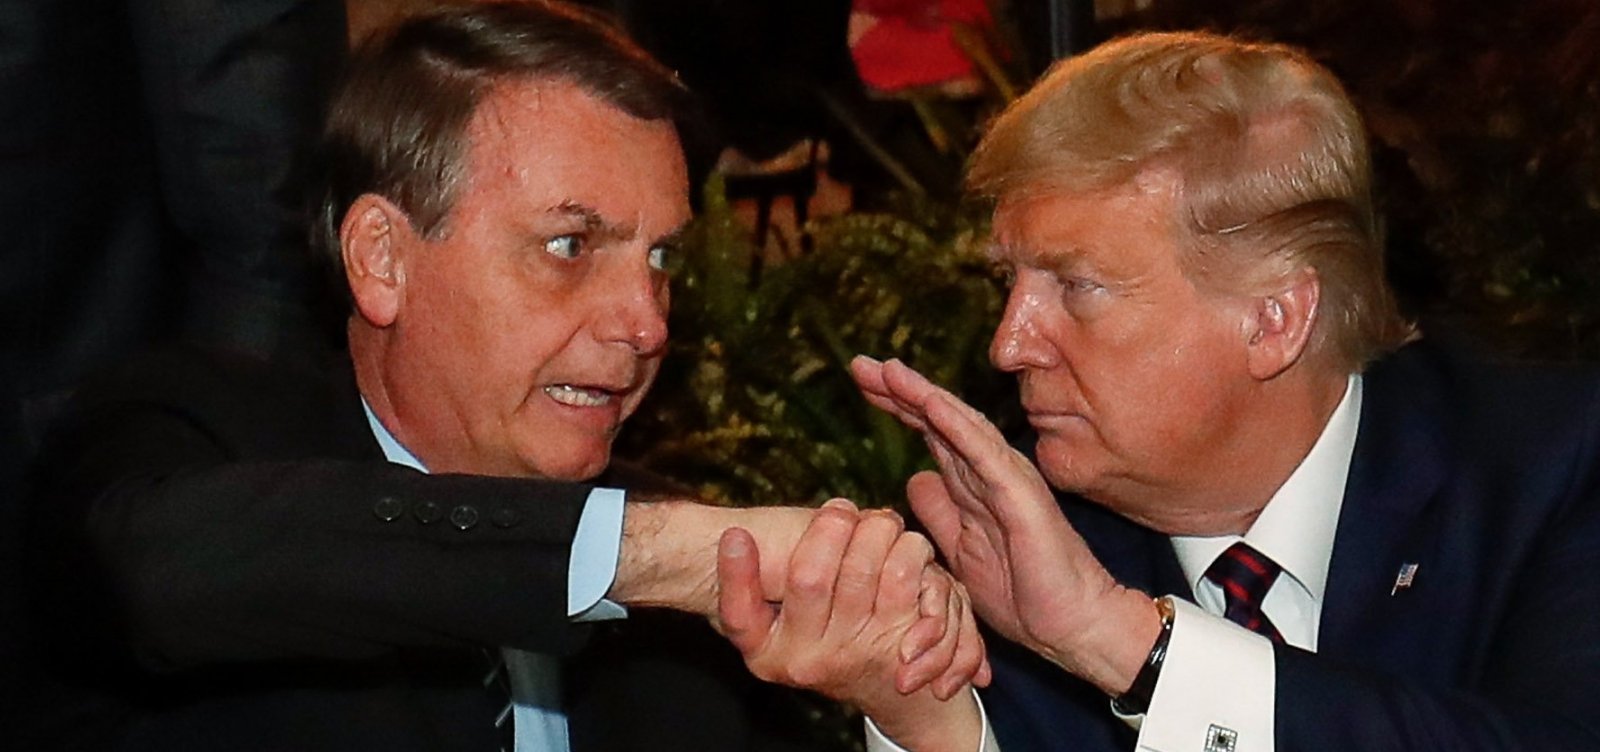 Bolsonaro evita comentar isolamento ampliado nos EUA: 'Brasil é diferente'